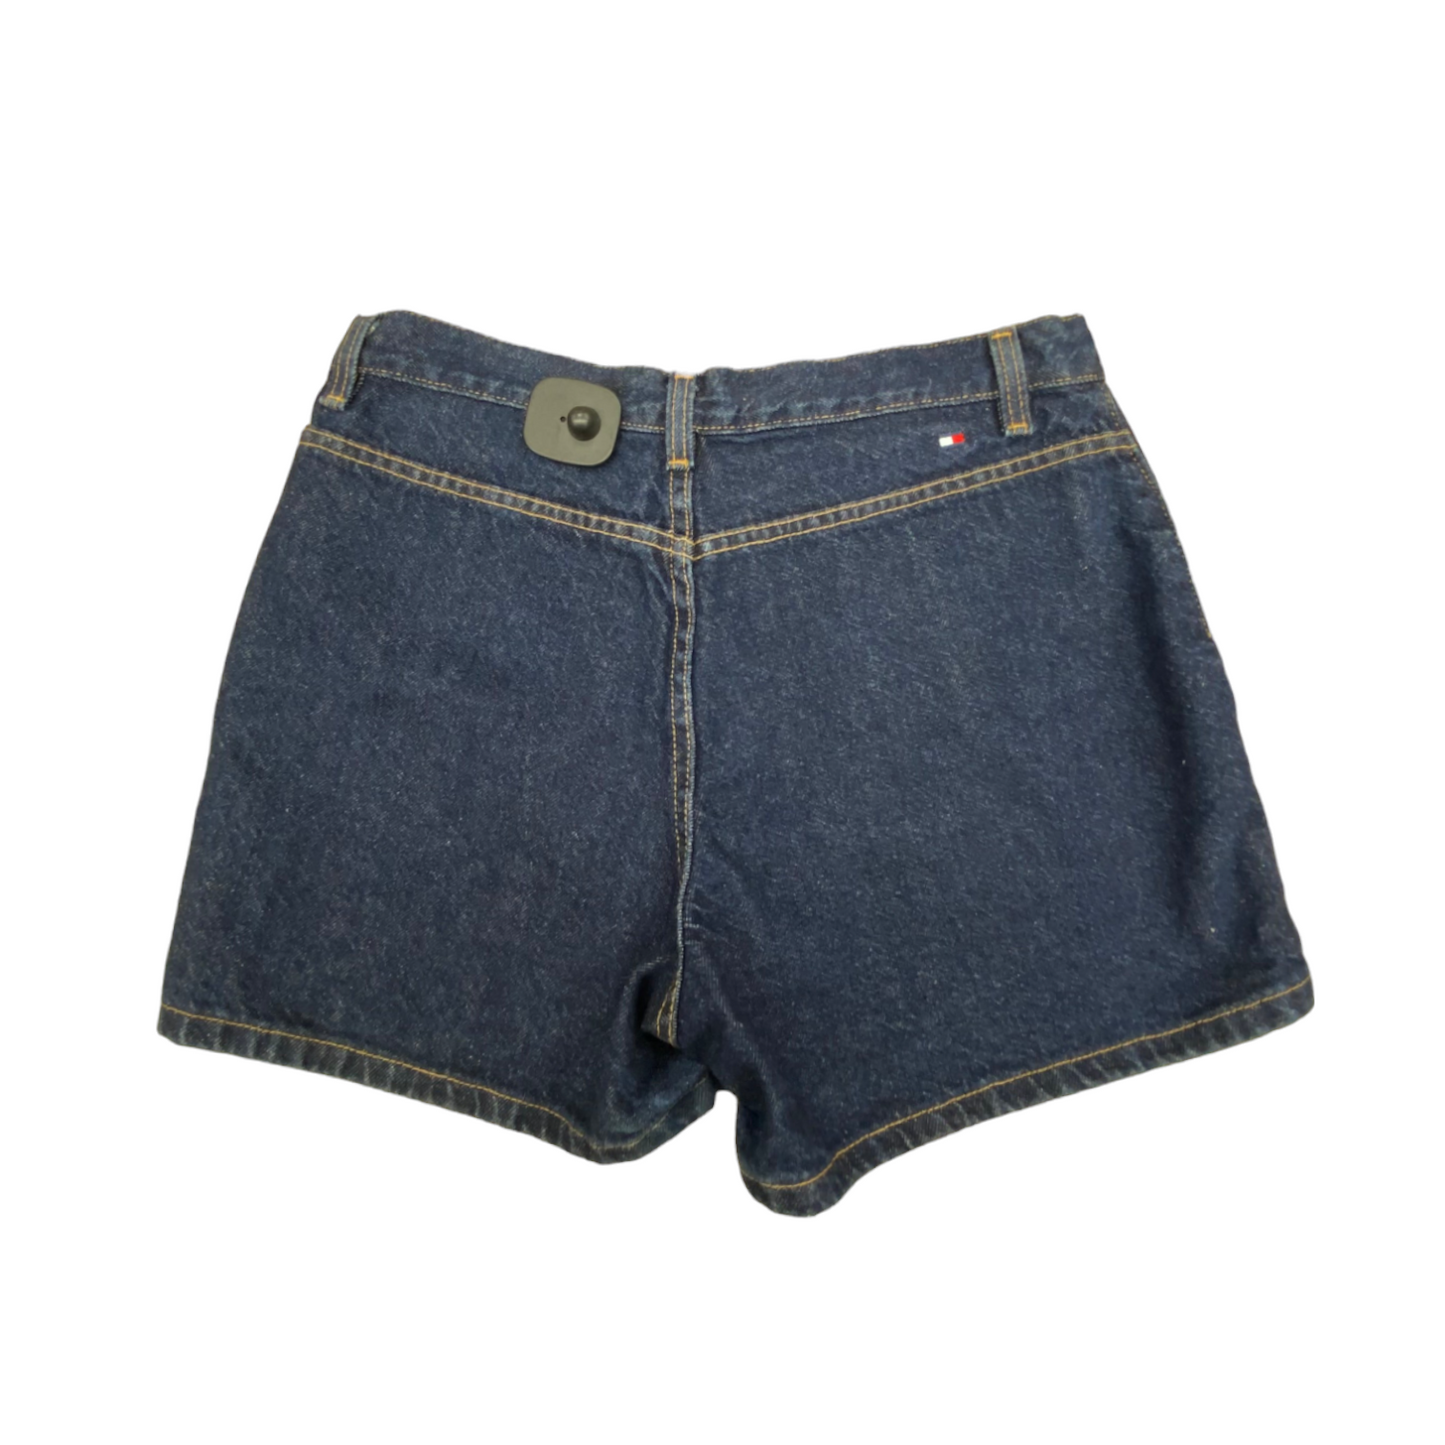 Shorts By Tommy Hilfiger  Size: 10